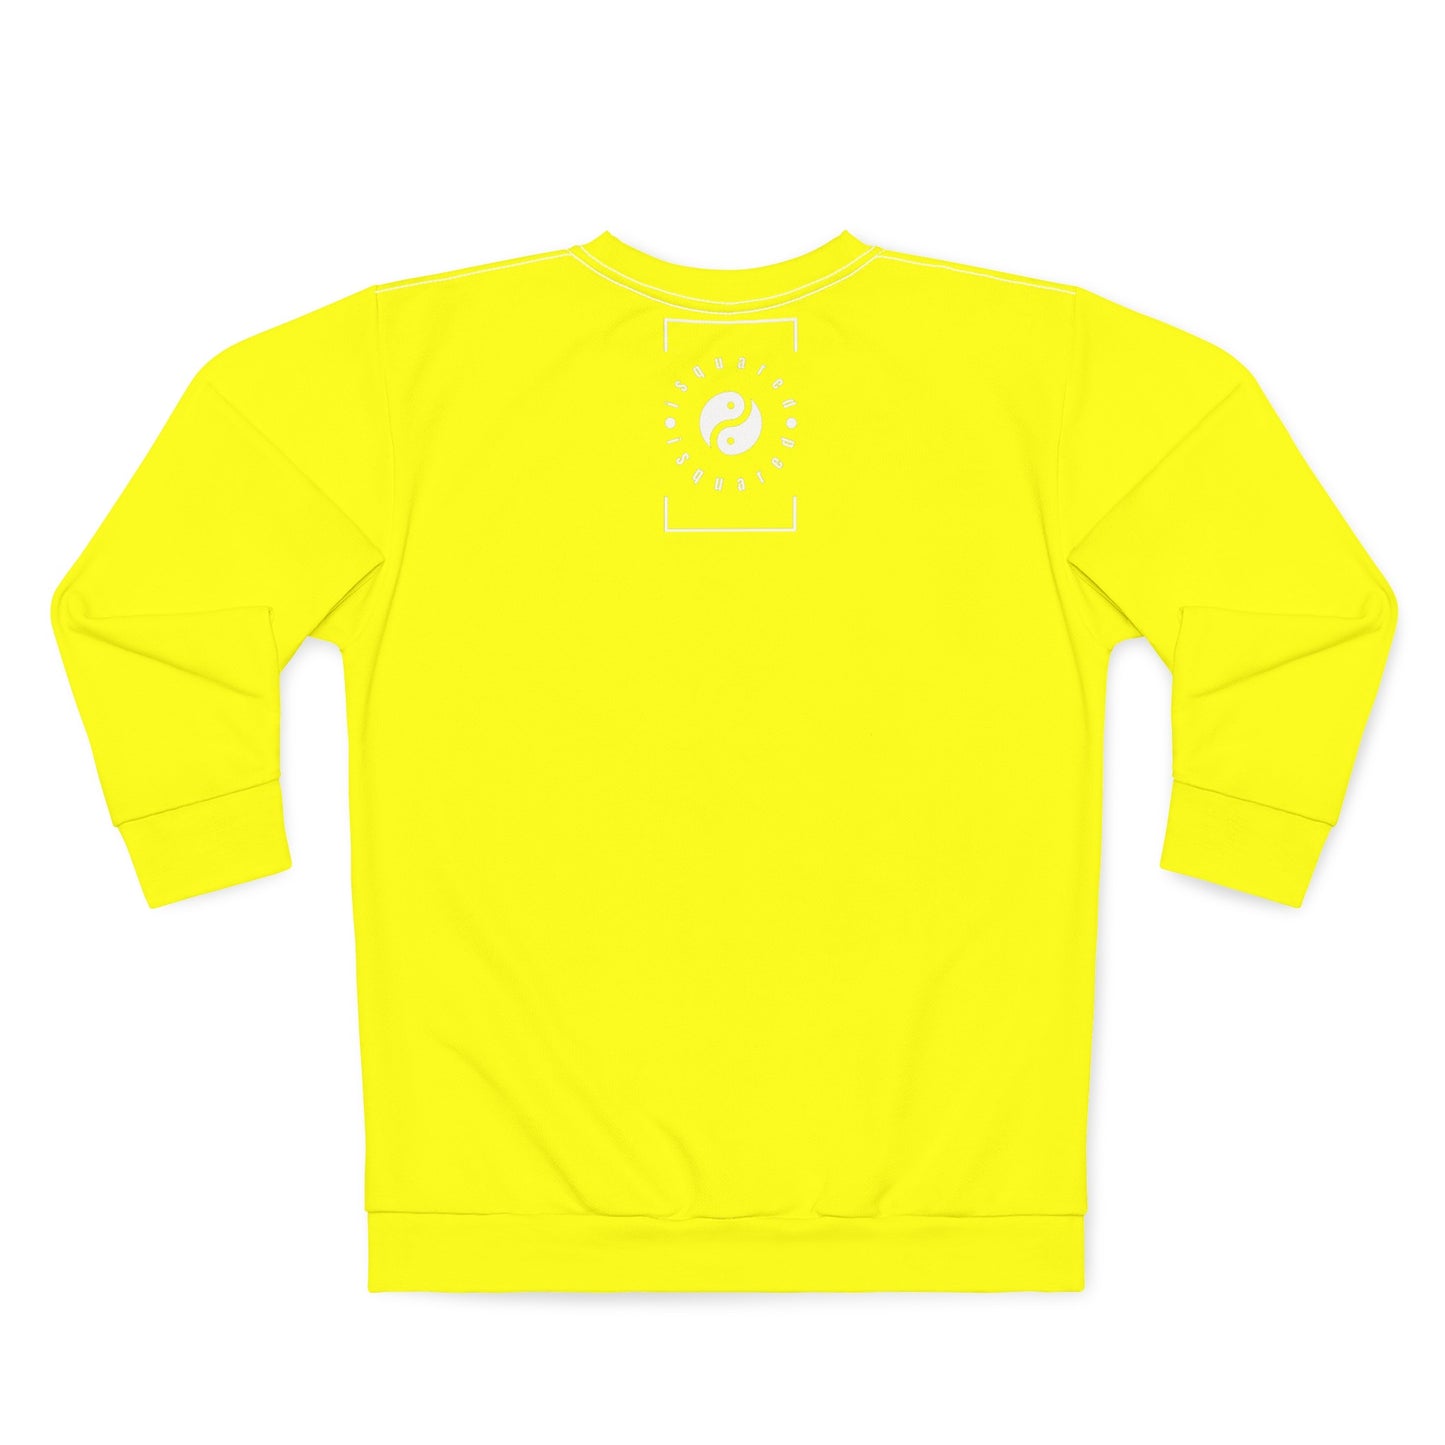 Jaune fluo FFFF00 - Sweat-shirt unisexe